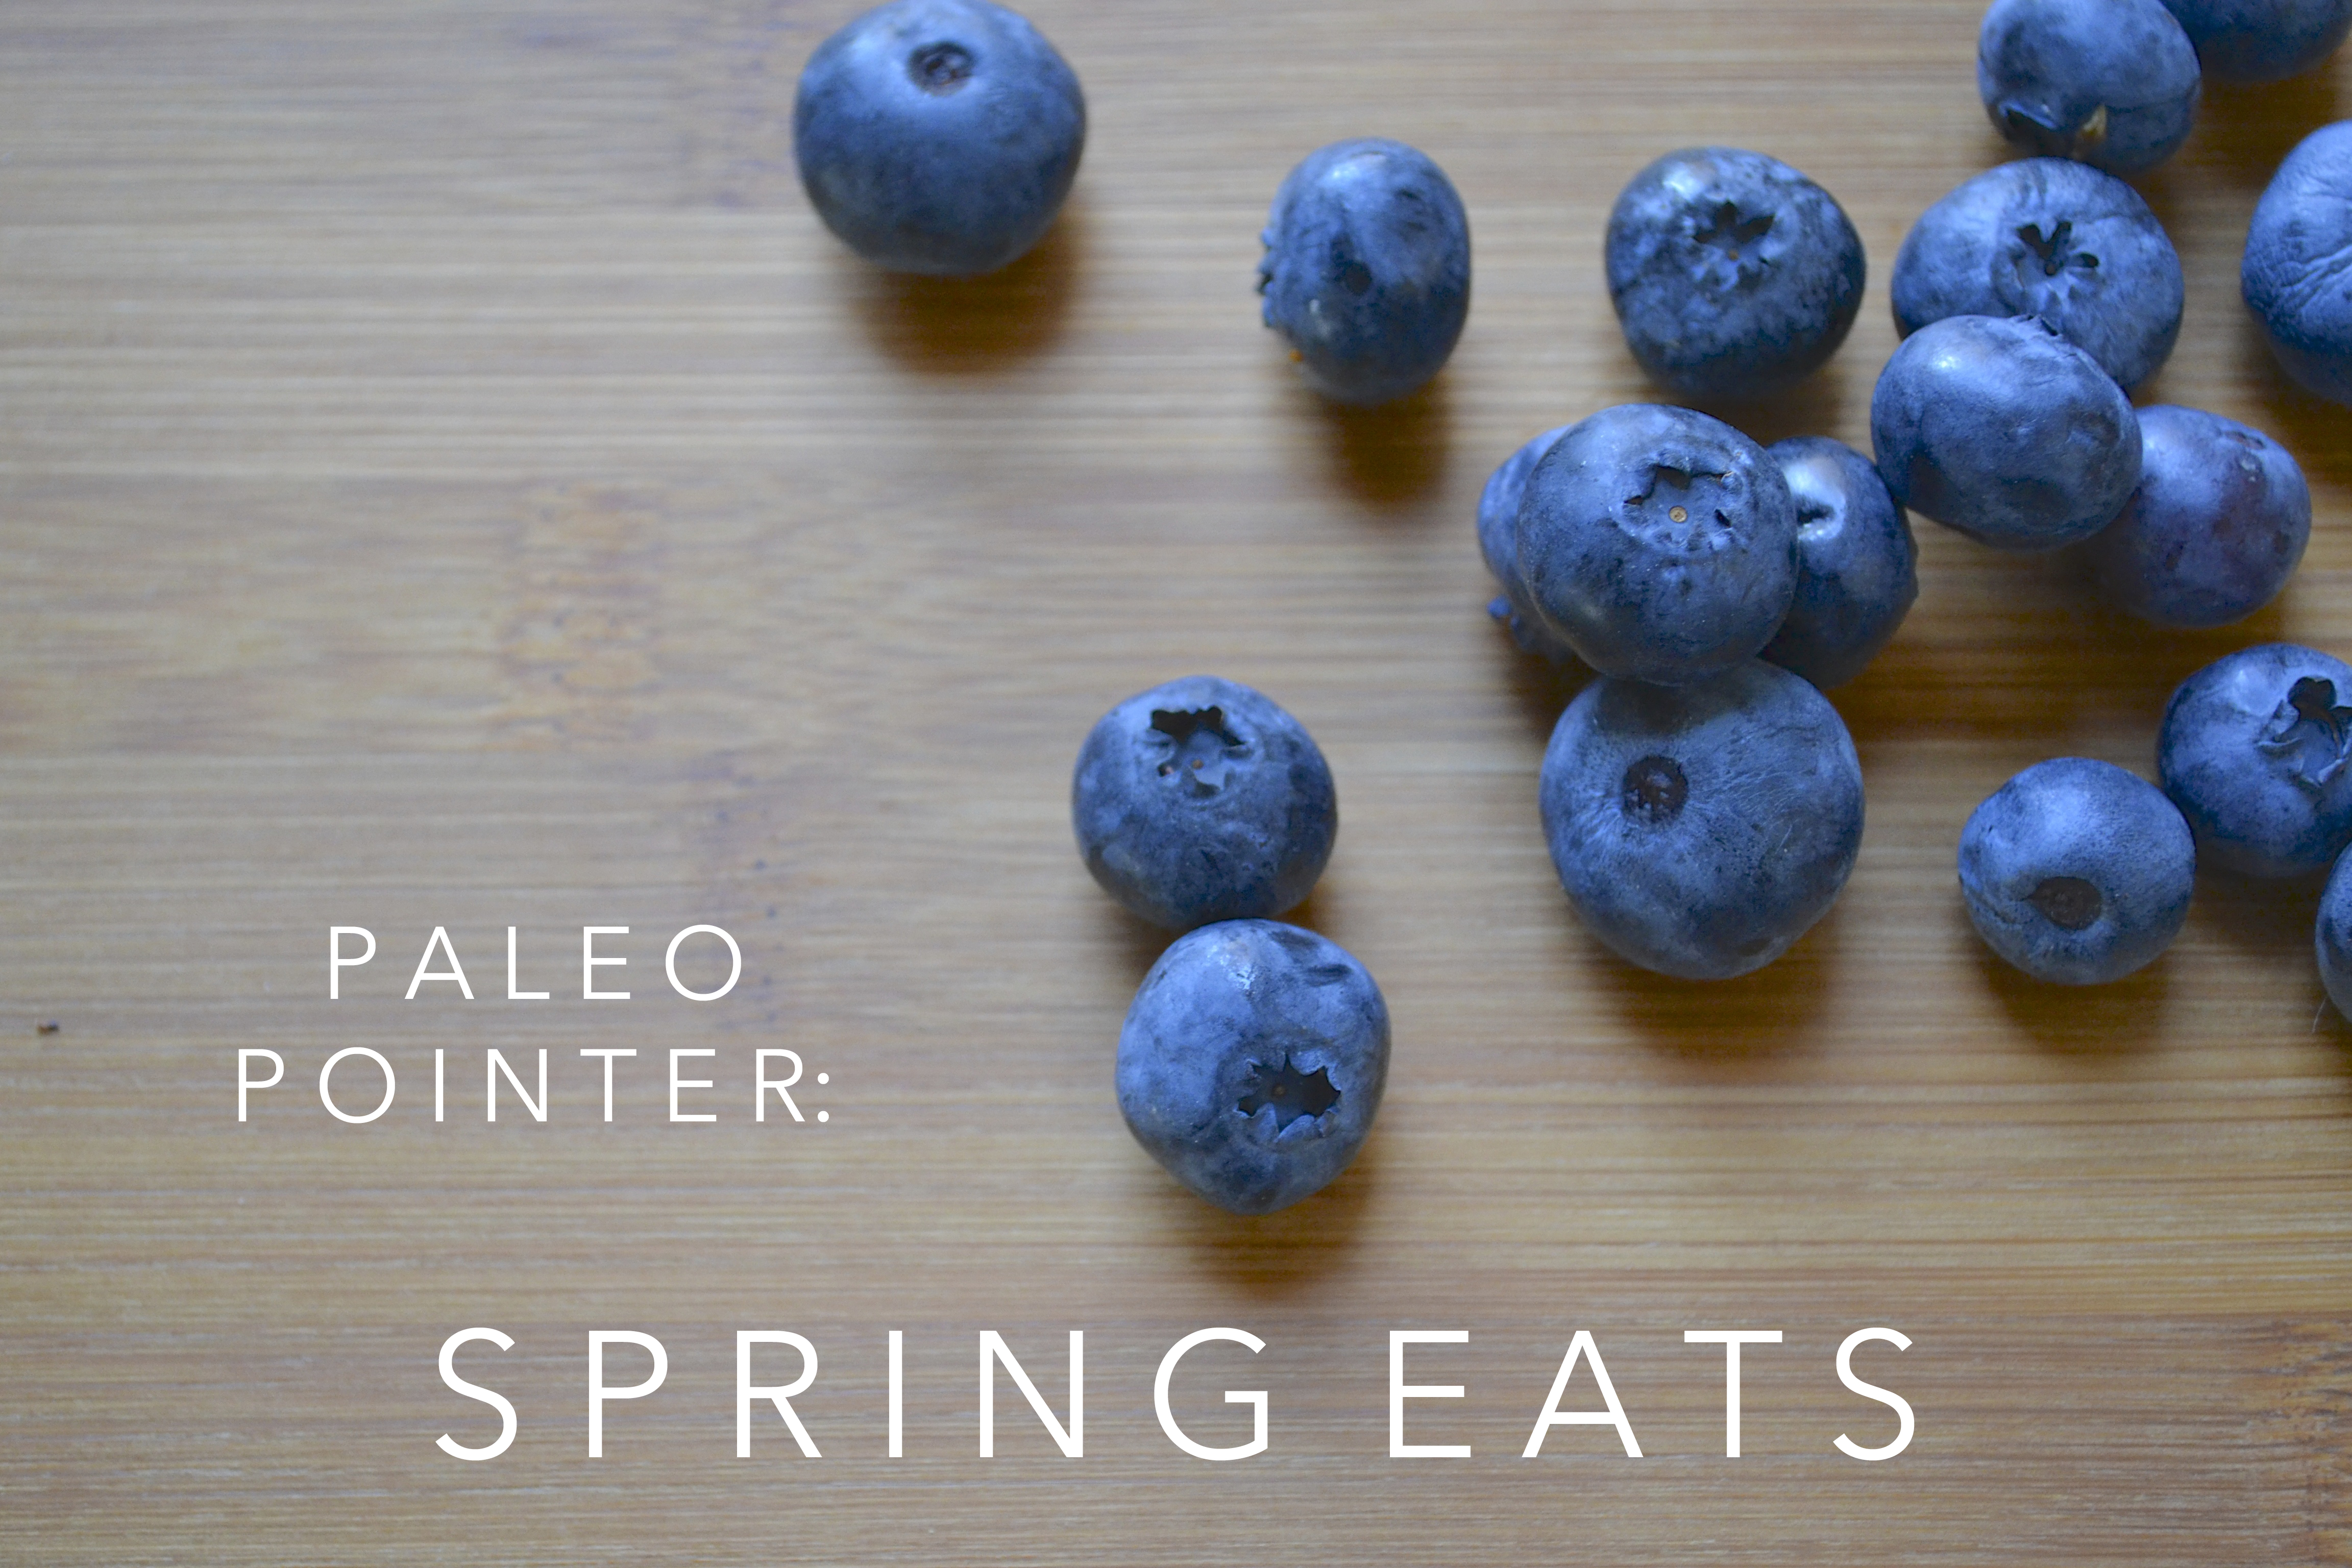 Paleo Pointer: Spring Eats